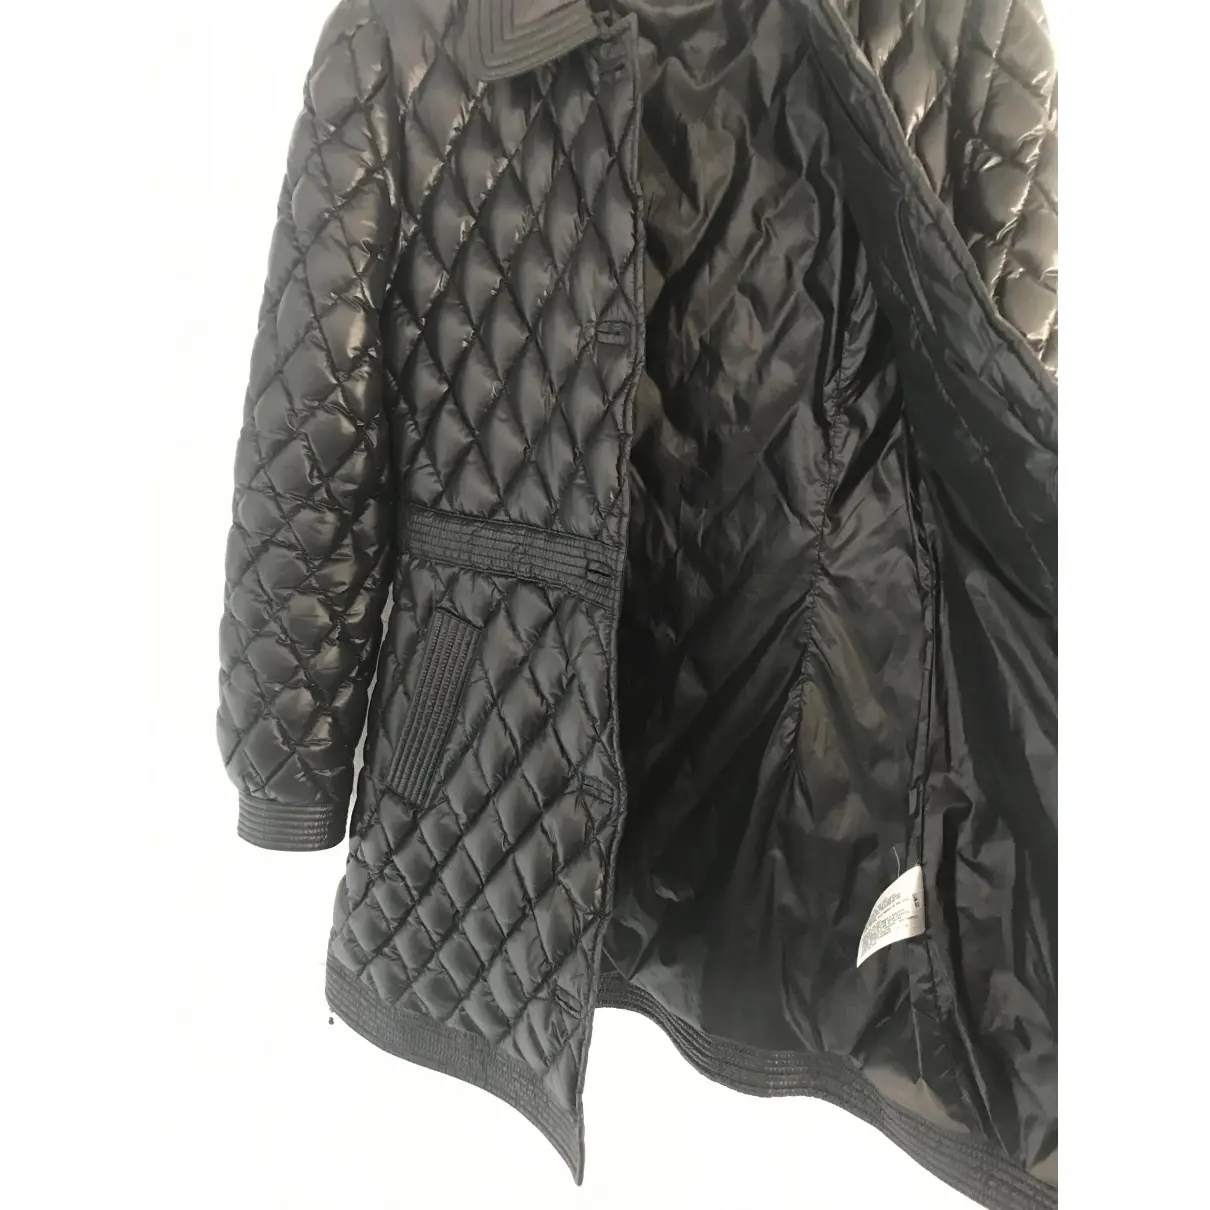 Buy Beayukmui Black Polyester Jacket online